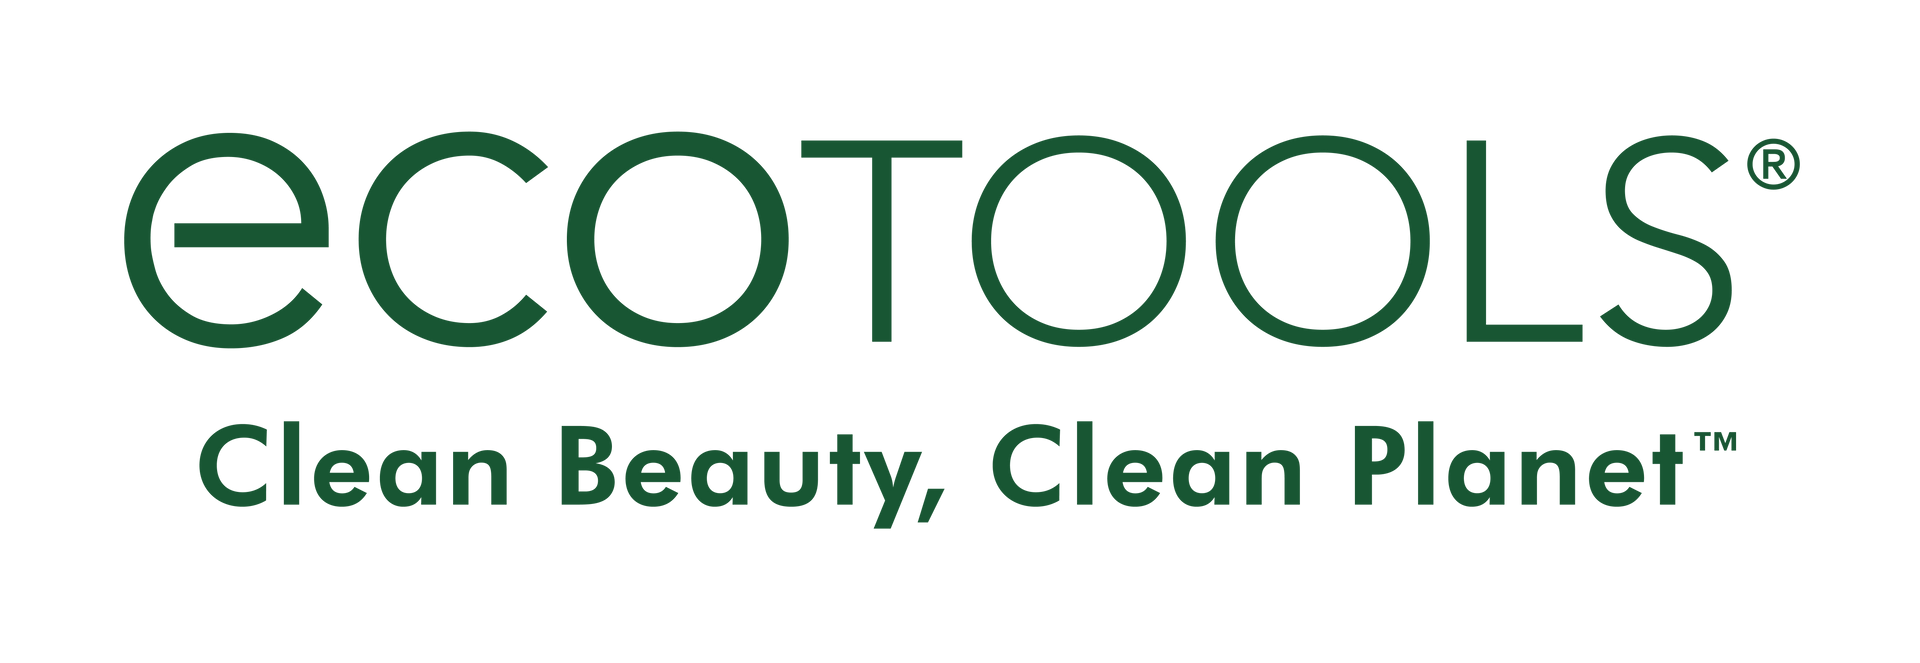 EcoTools logo - 